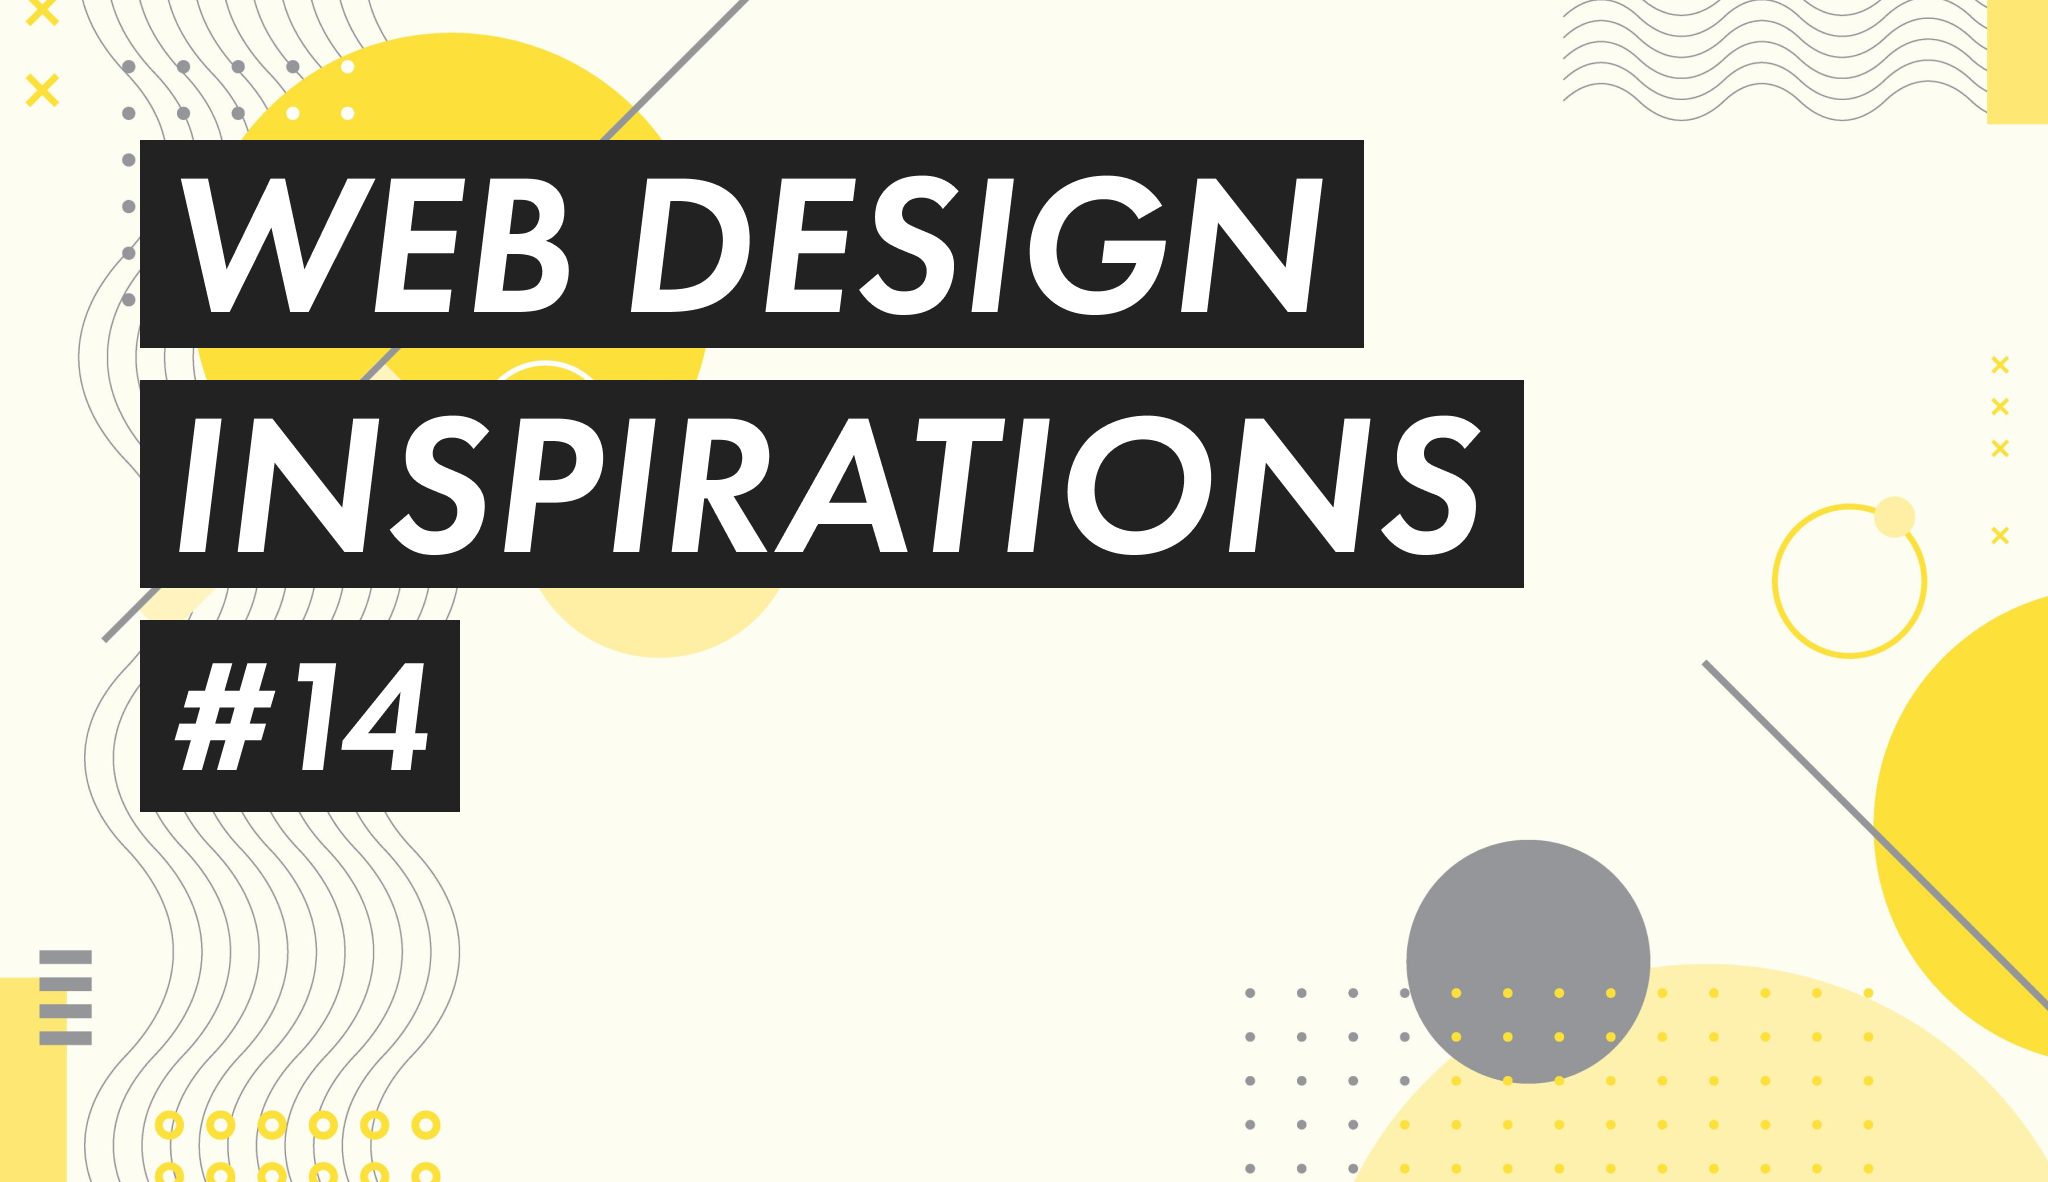 Web Design Inspirations #14